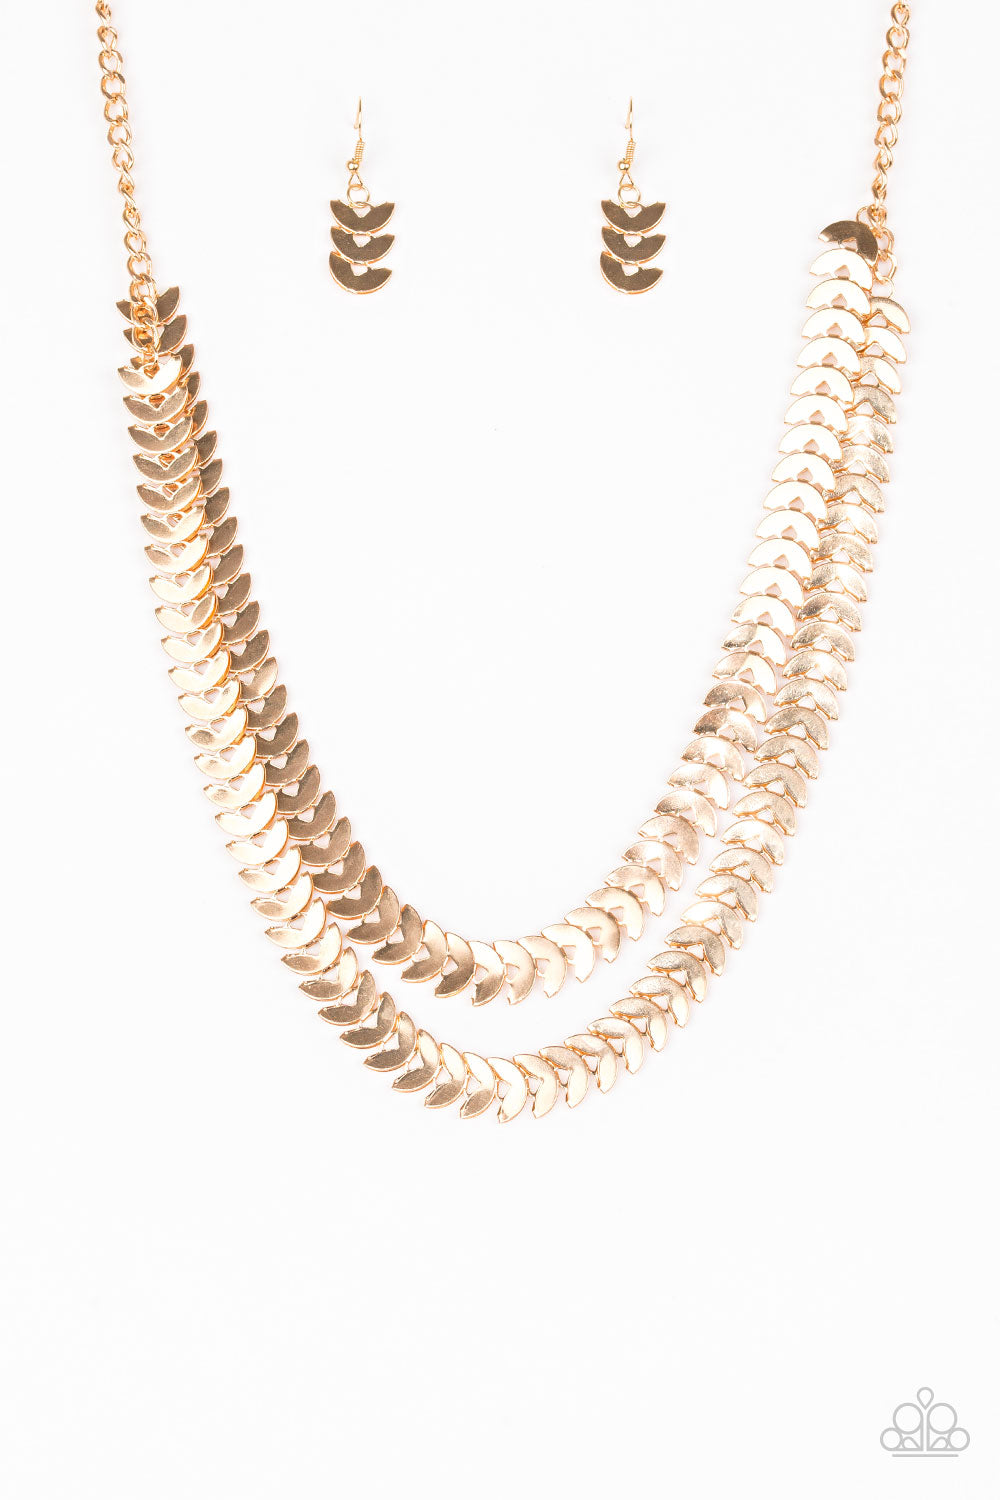 Paparazzi Accessories - Industrial Illumination - Gold Necklace